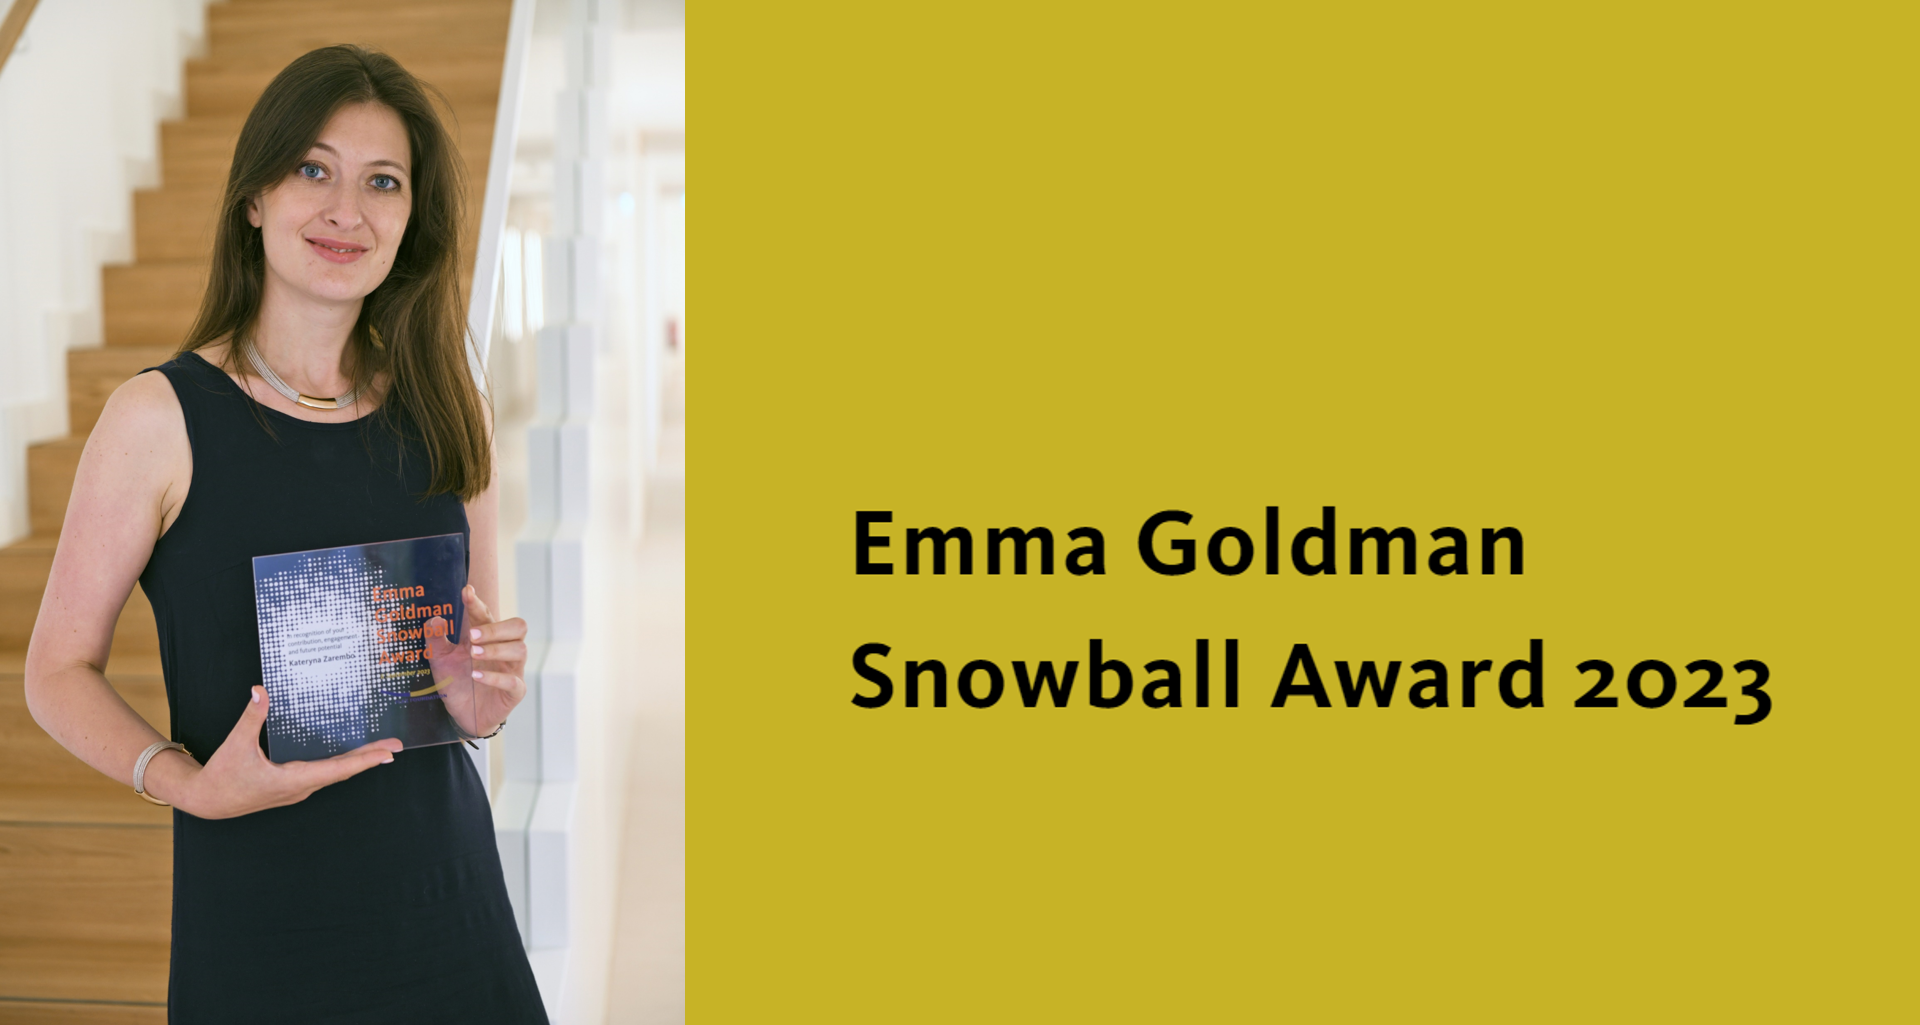 Kateryna Zarembo is honored with Emma Goldman Snowball Award